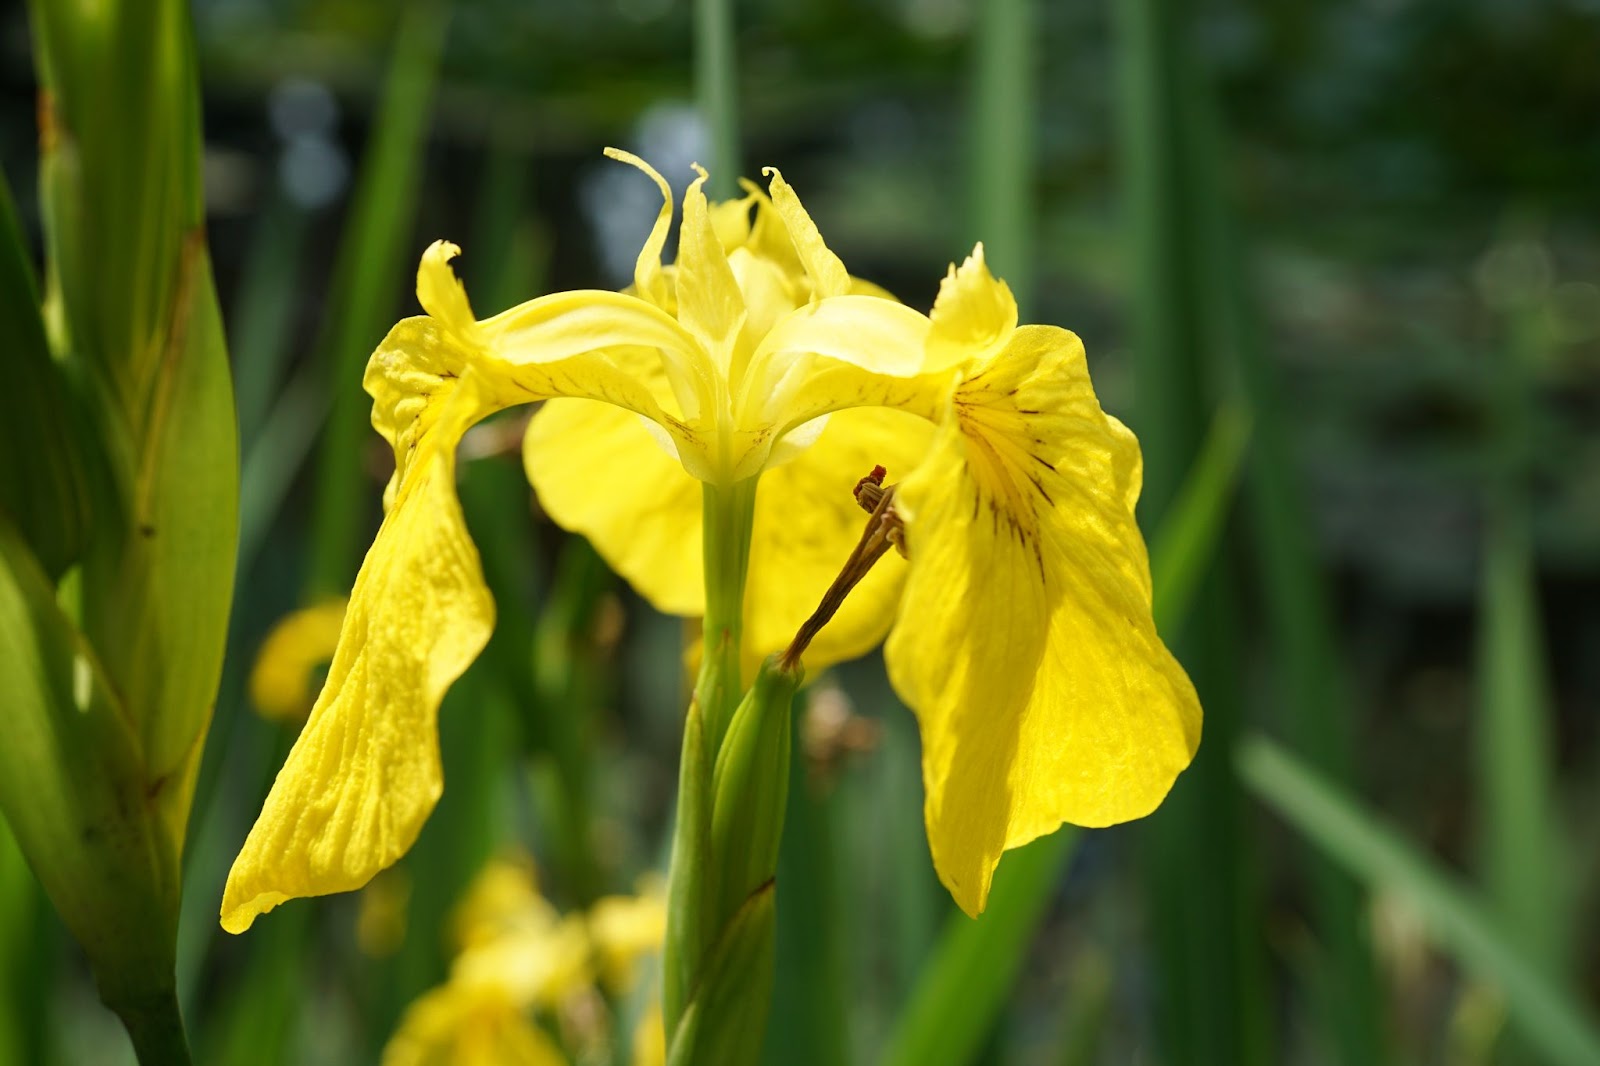 9. Irisul de baltă - Iris pseudacorus